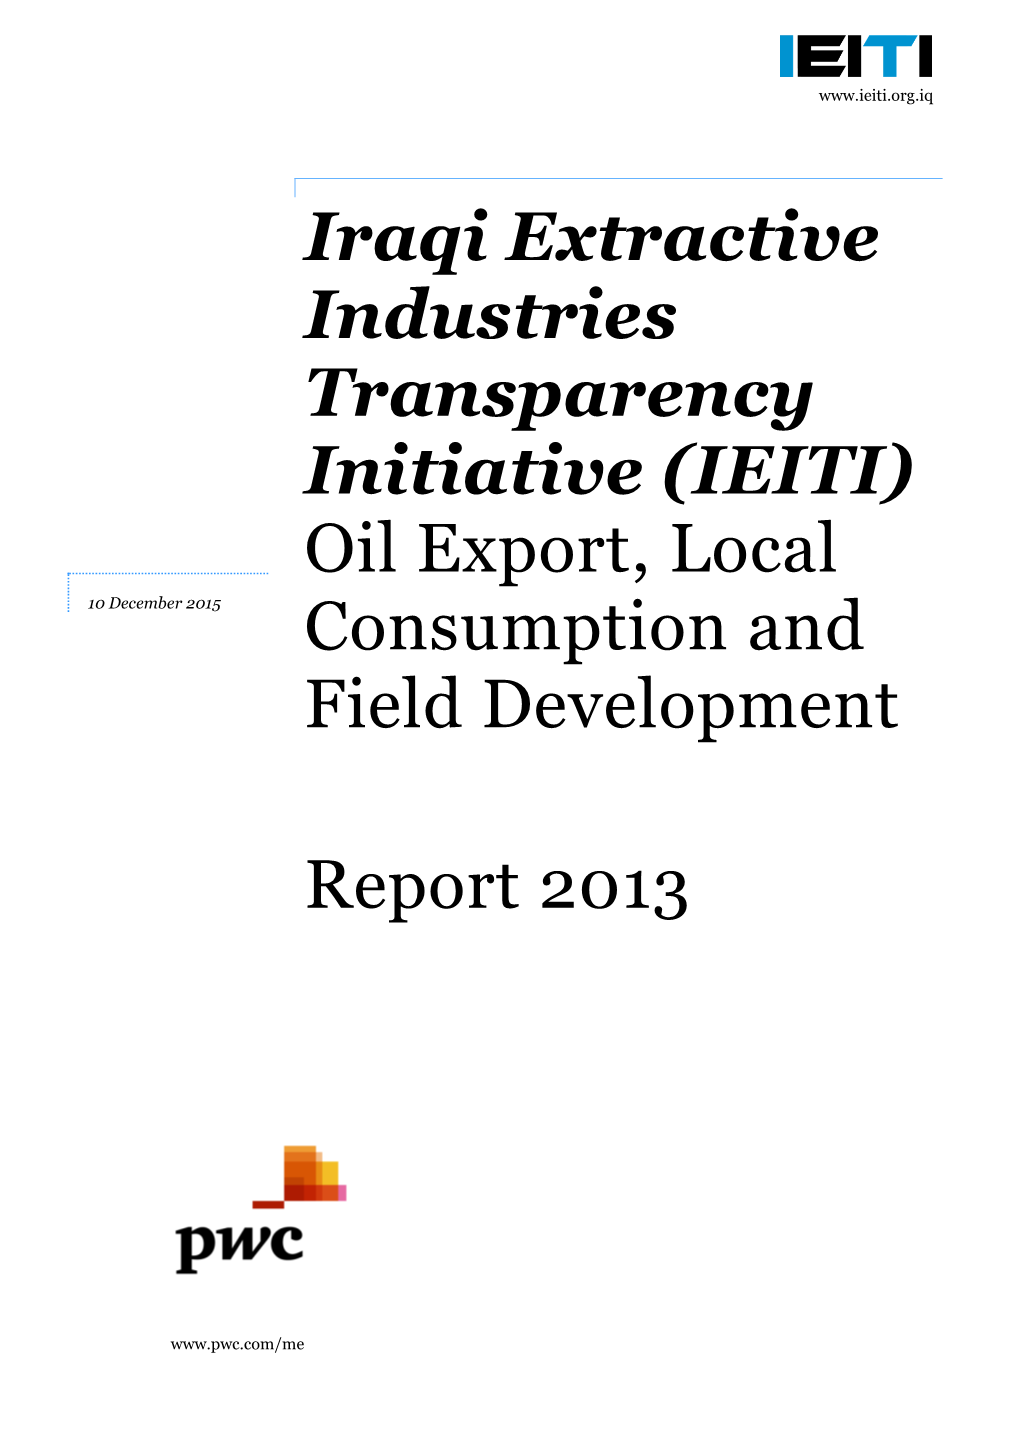 Iraqi Extractive Industries Transparency Initiative (IEITI) Oil